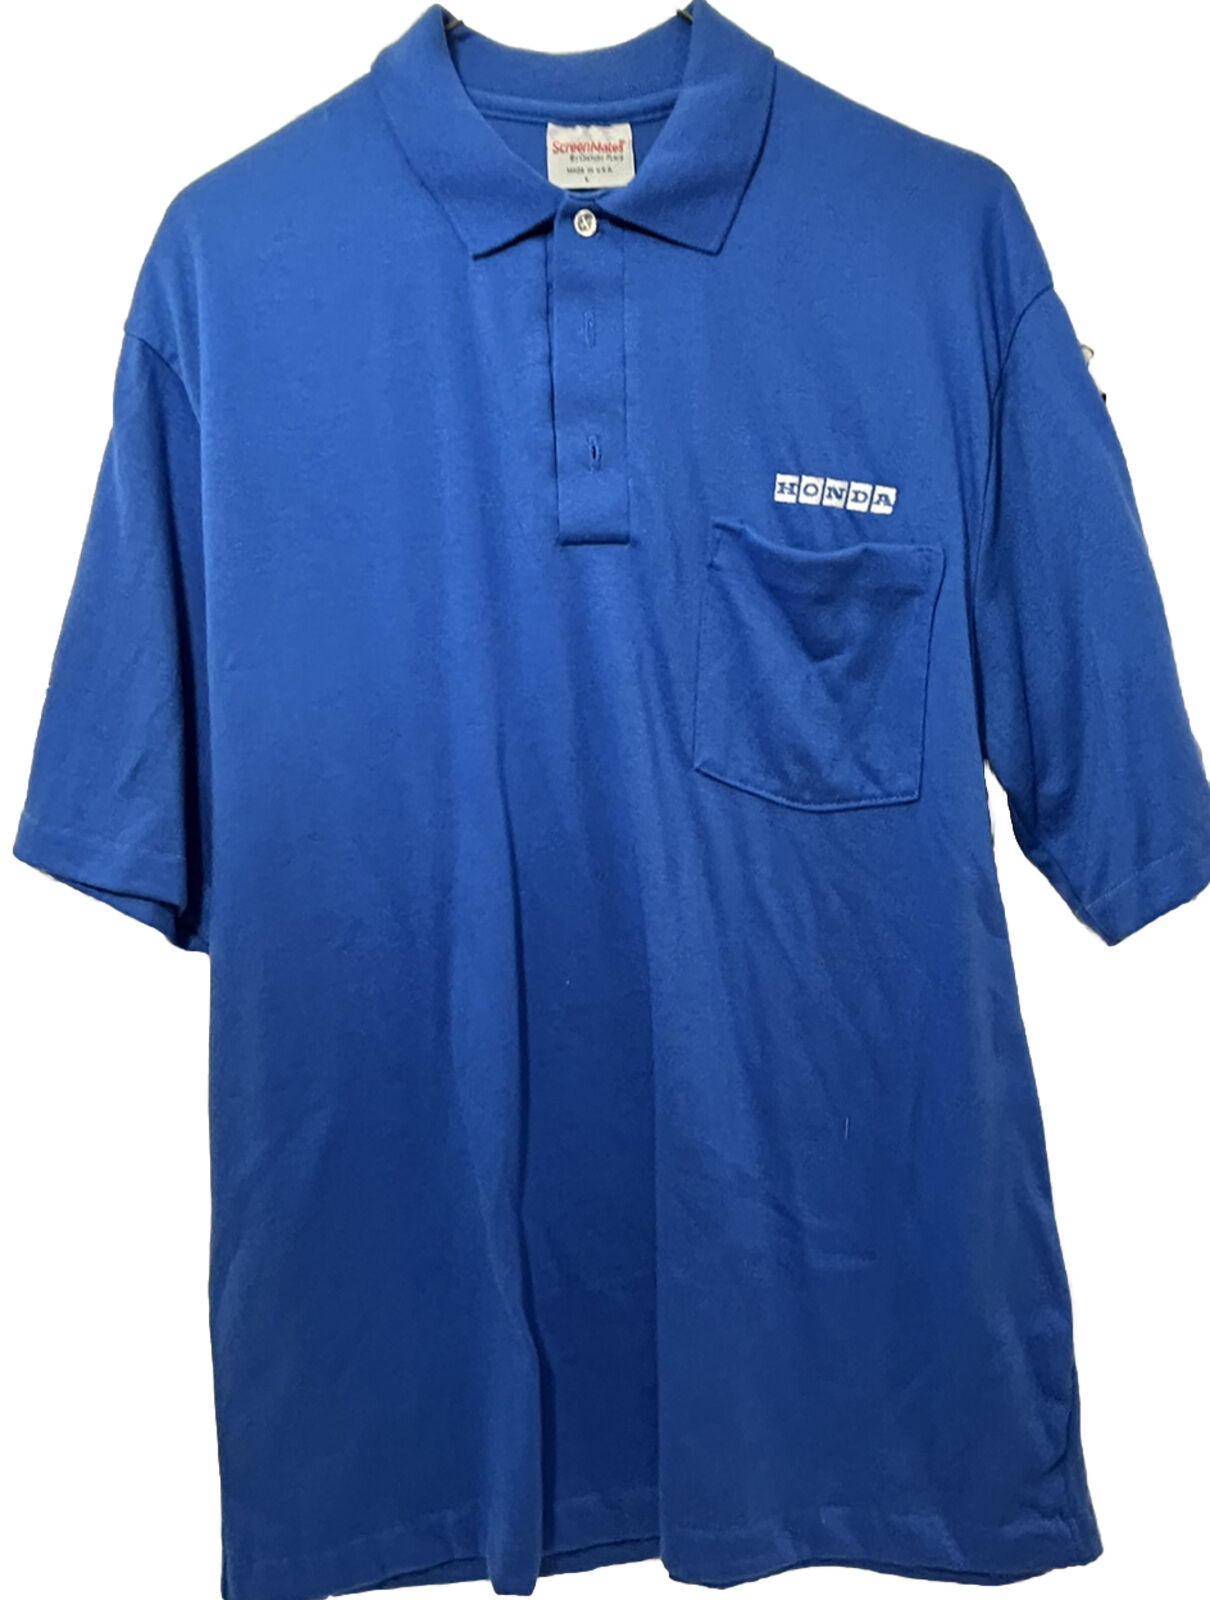 Honda Mens Blue Polo Shirt Size Large vintage